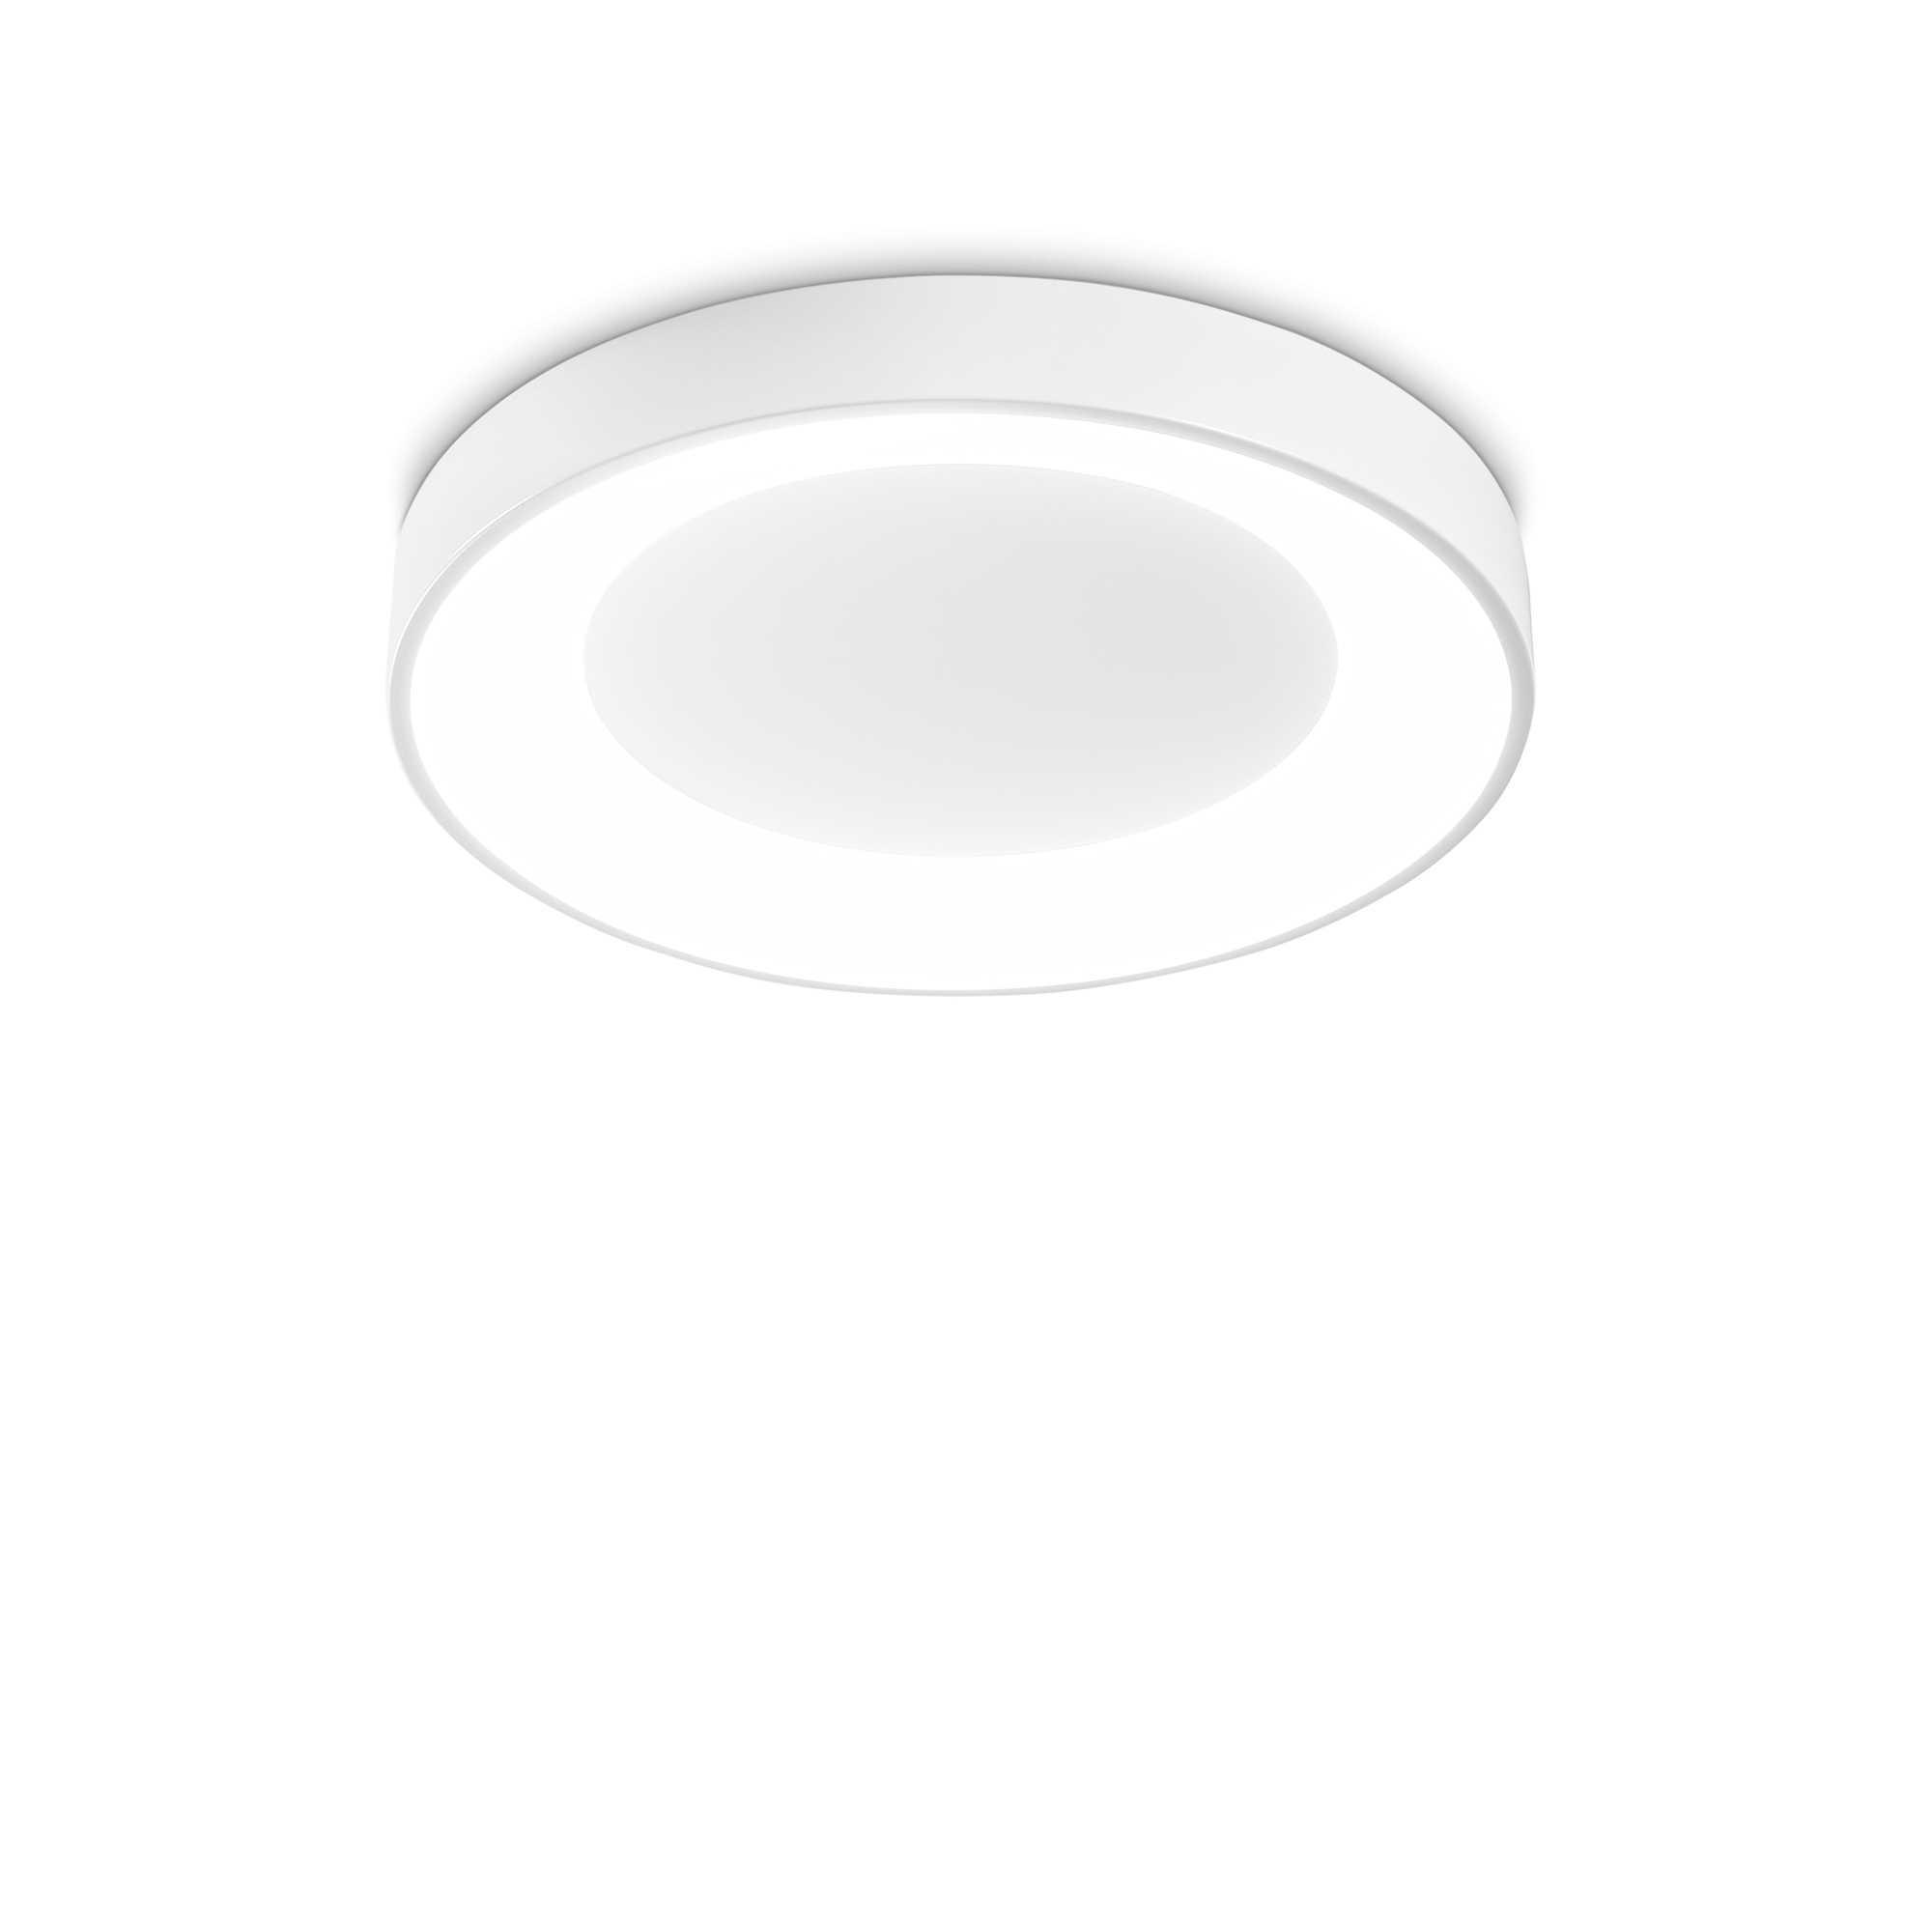 ideal lux ideal lux lampada da soffito mod planet pl d40 bianco 312347